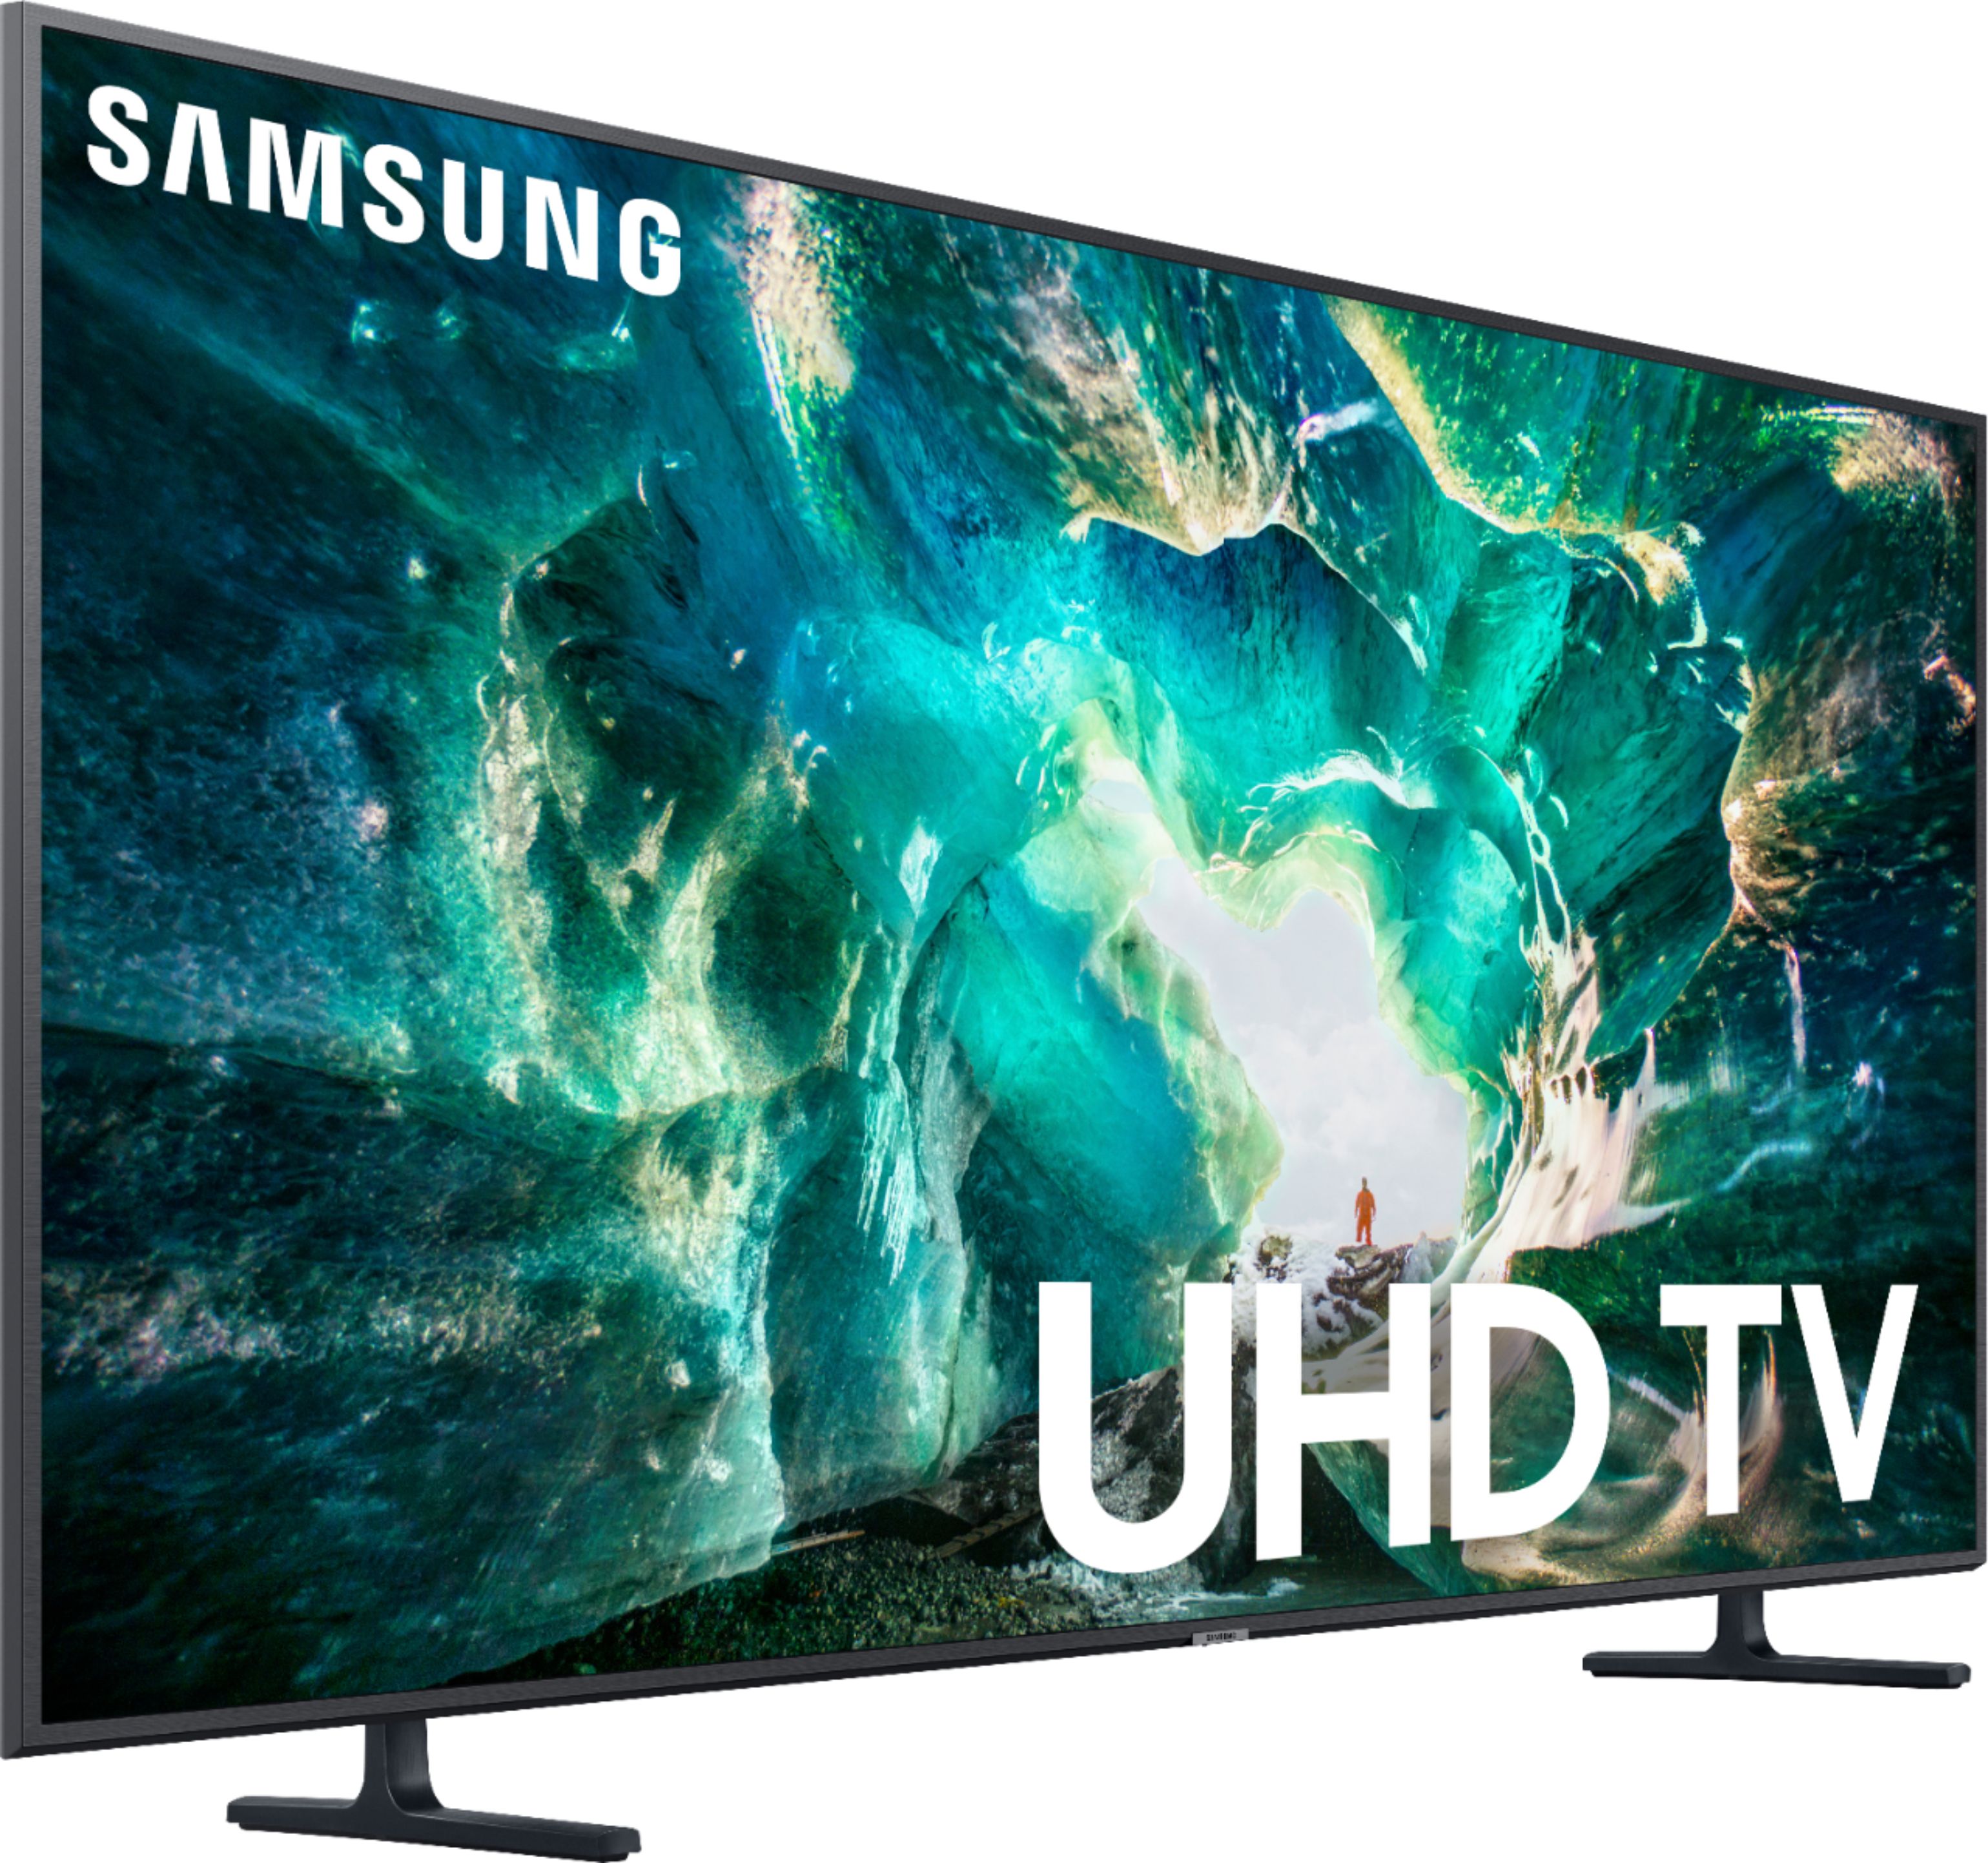 Angle View: Samsung - 65" Class 8 Series LED 4K UHD Smart Tizen TV